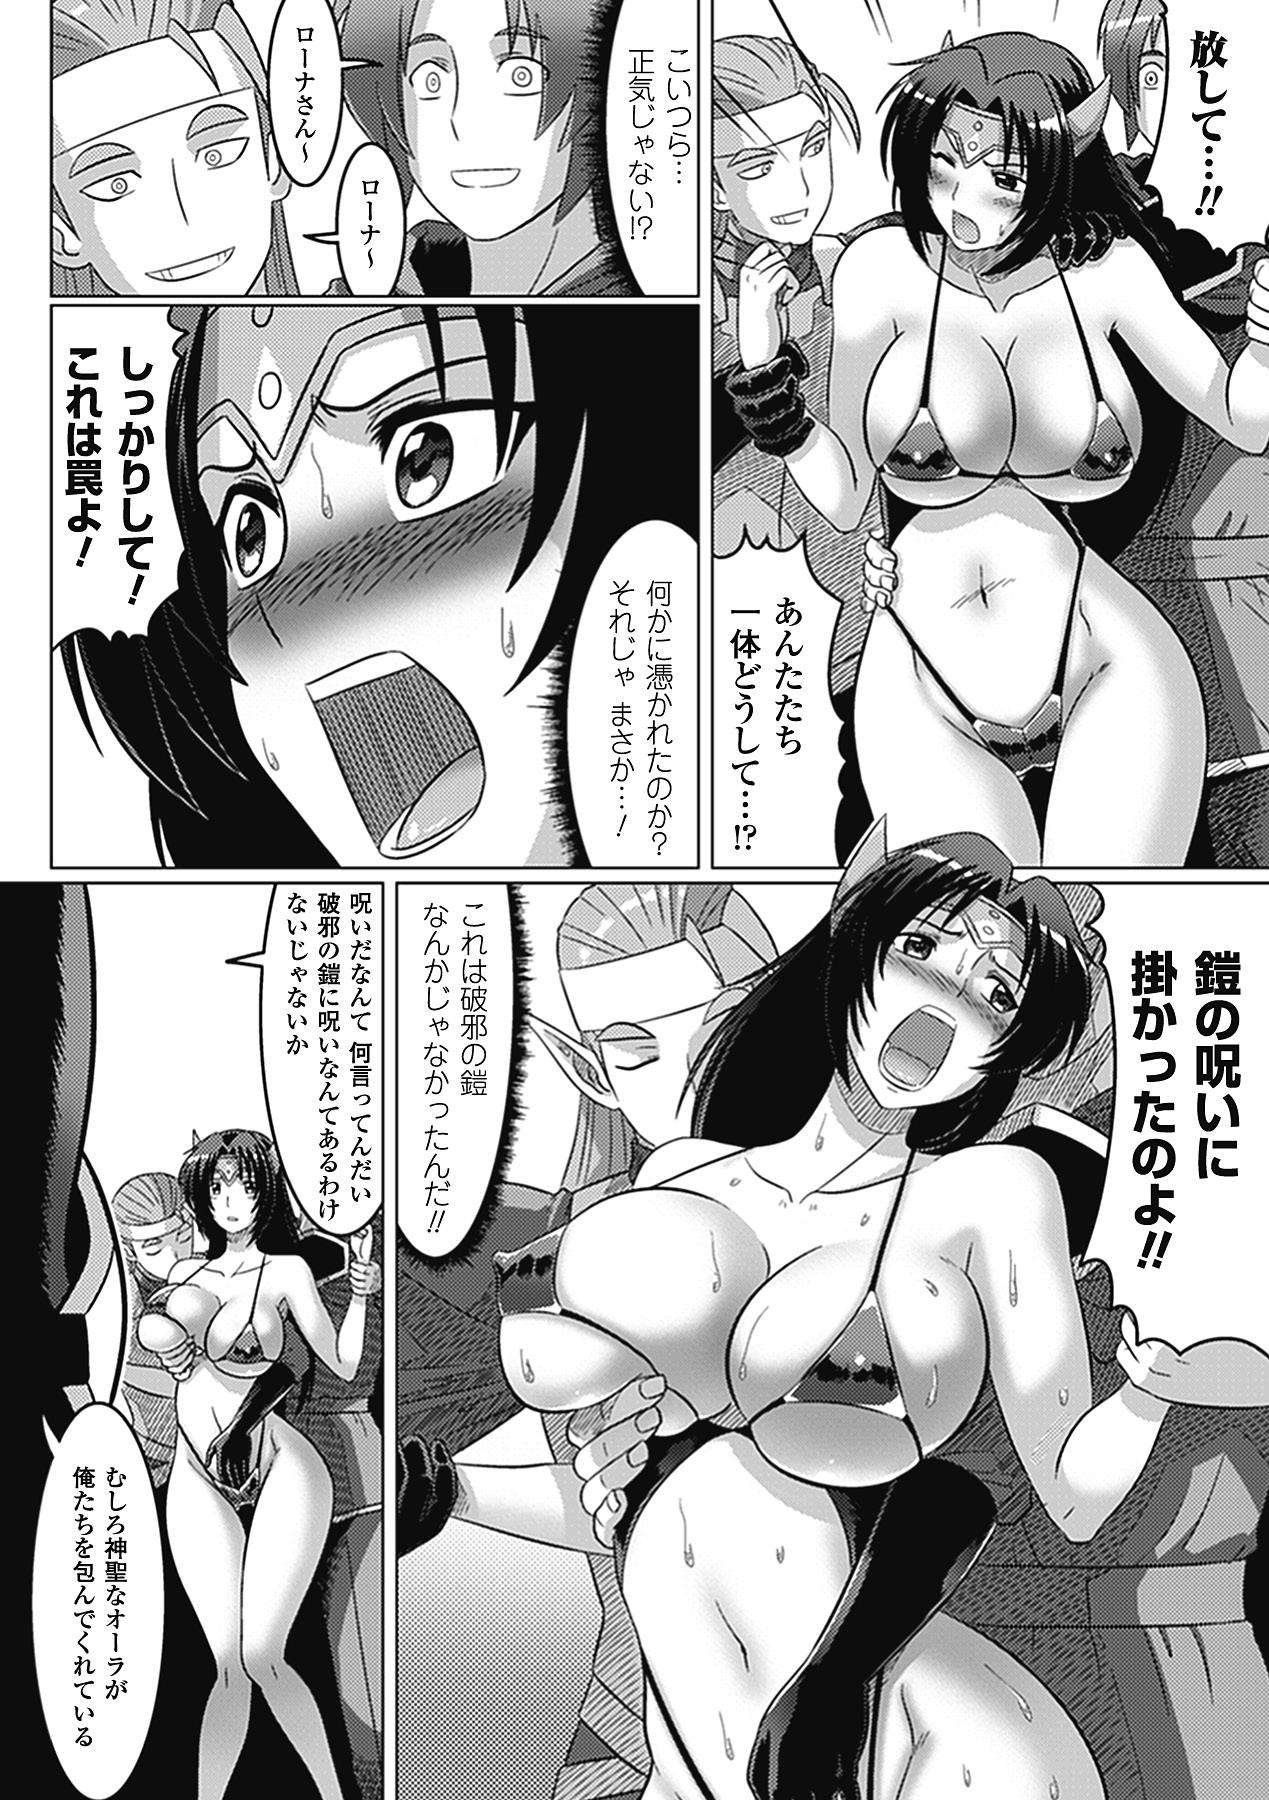 Ero Mizugi Anthology Comics - Erotic Swimwear Anthology Comics Vol. 2 29